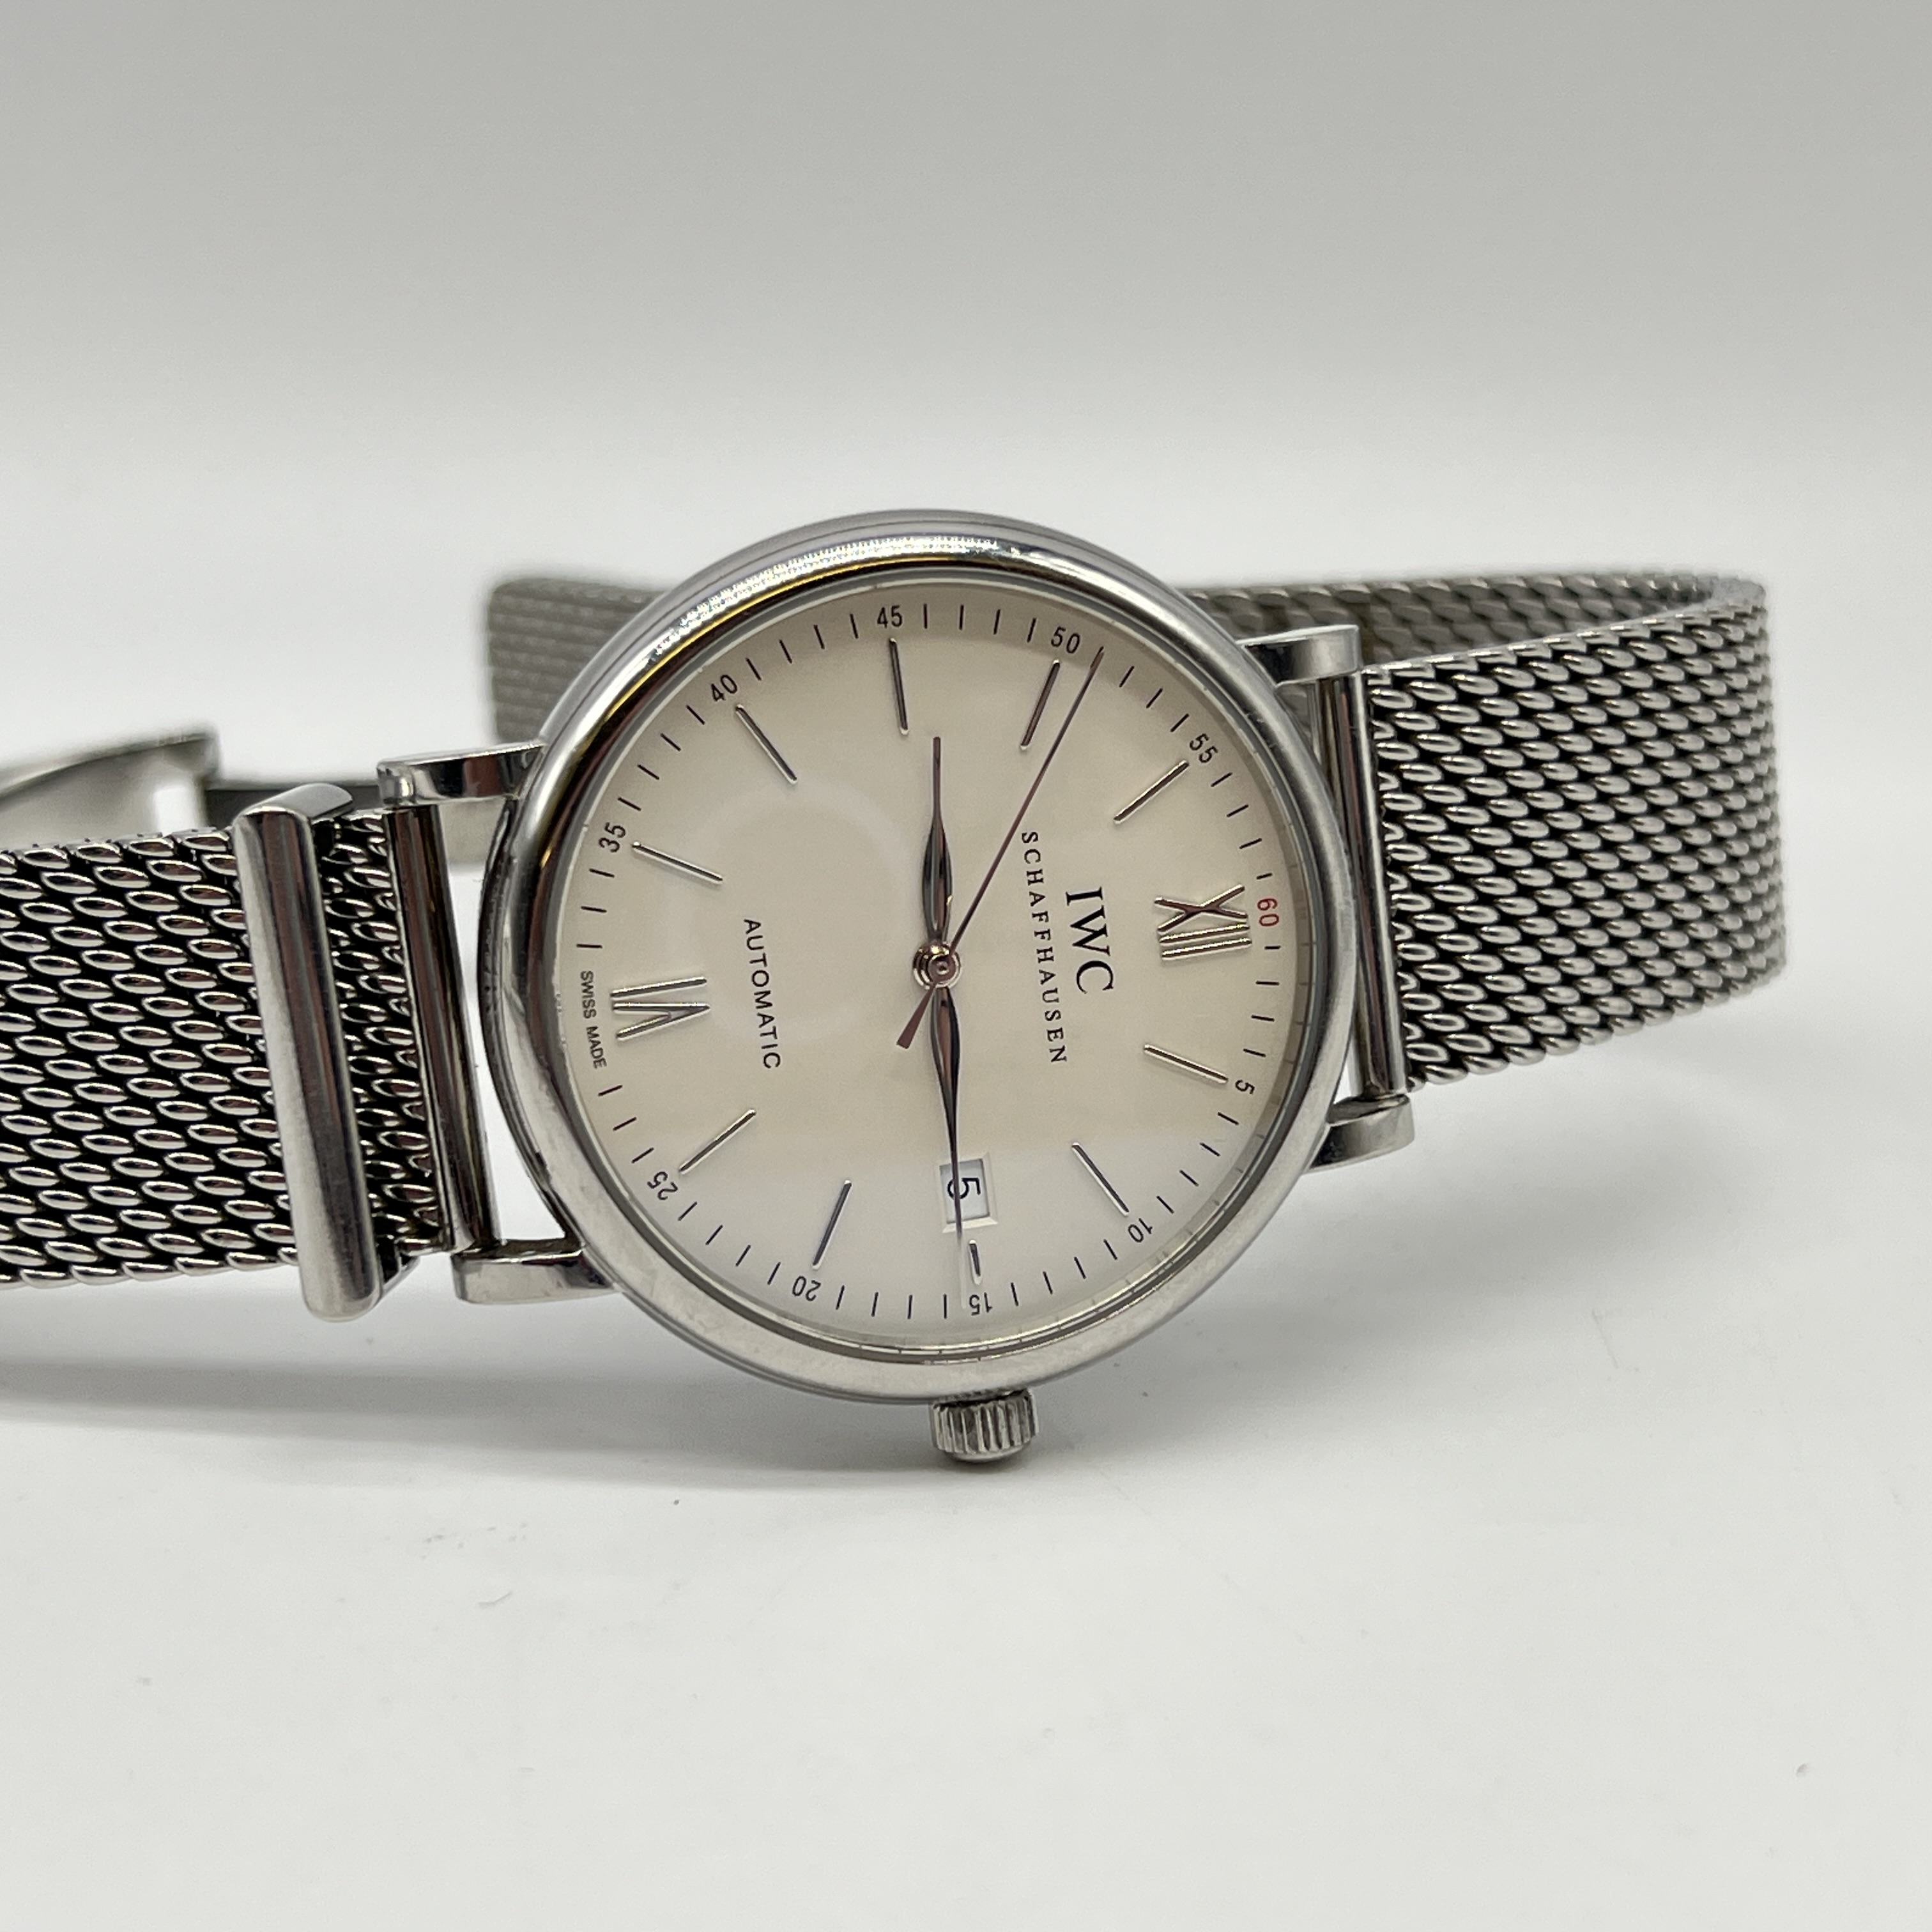 A Gents IWC Schaffhausen Portofino Automatic Watch - Image 9 of 11